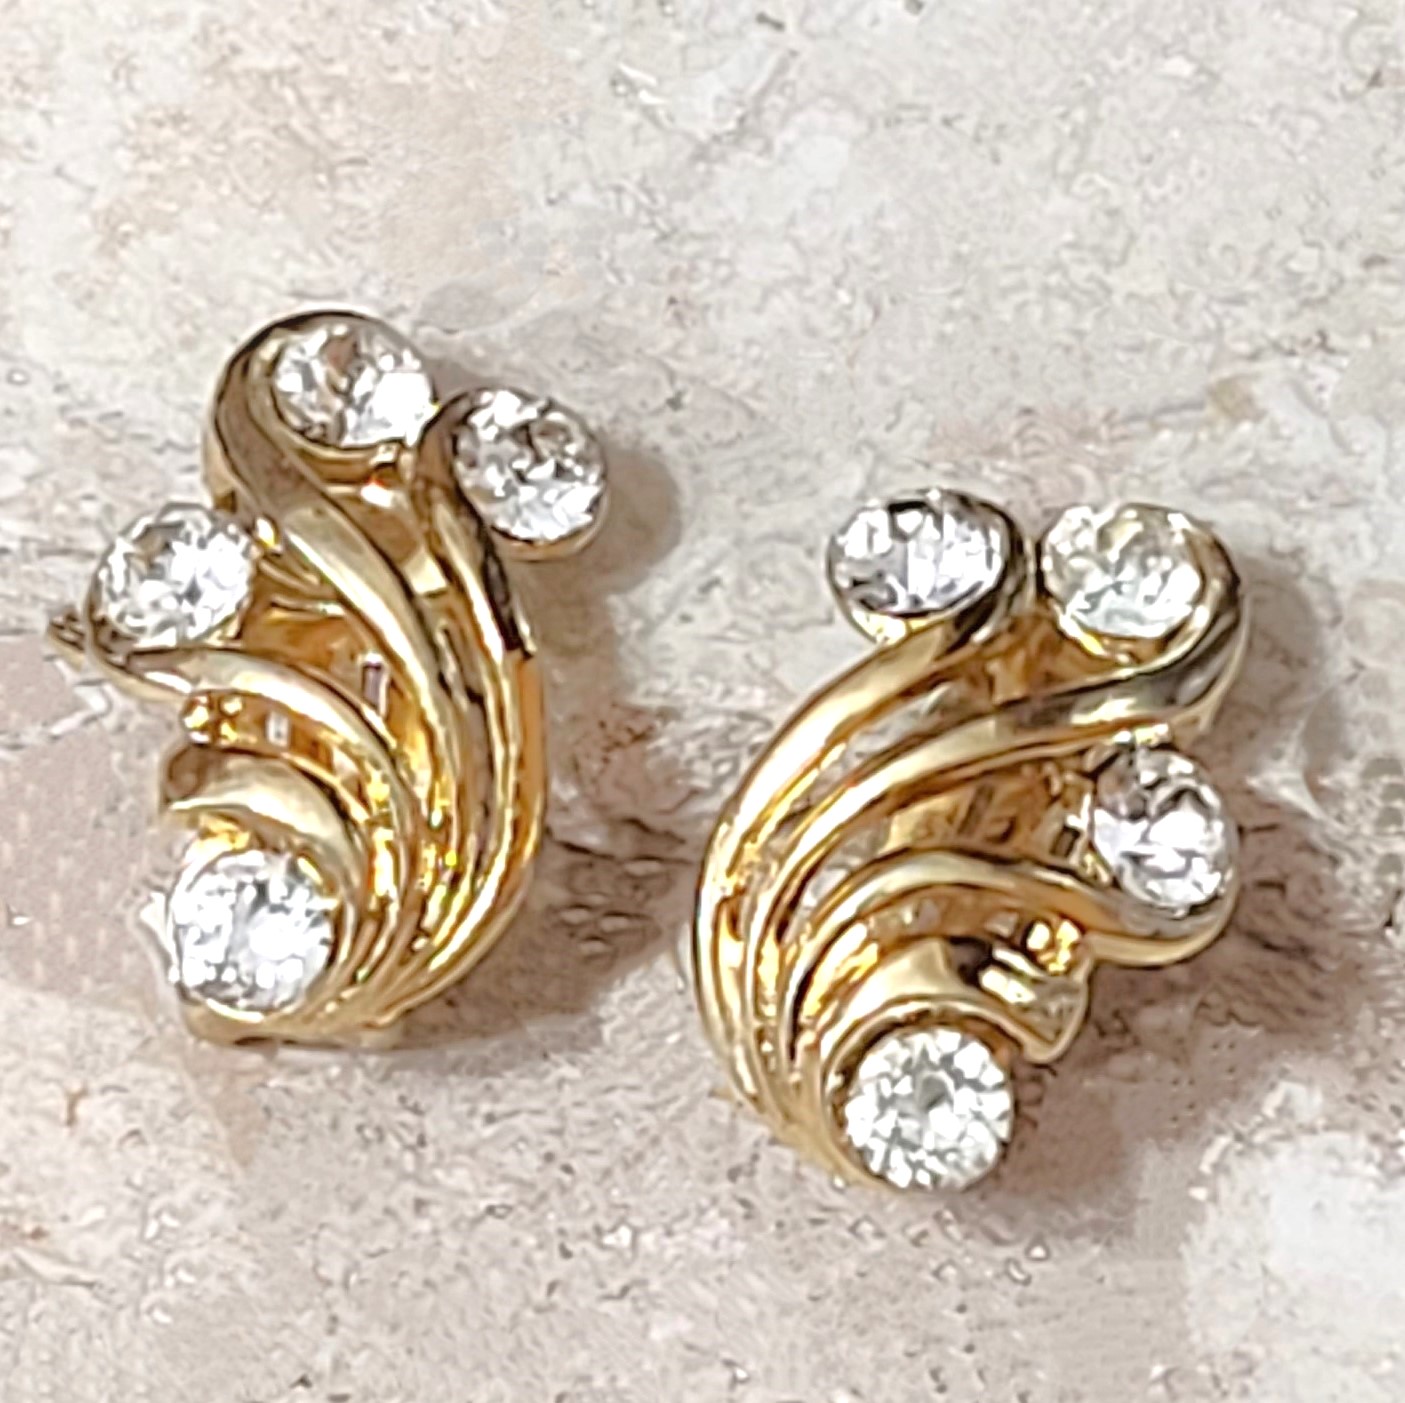 Rhinestone and gold earrings, vintage clip on earrings